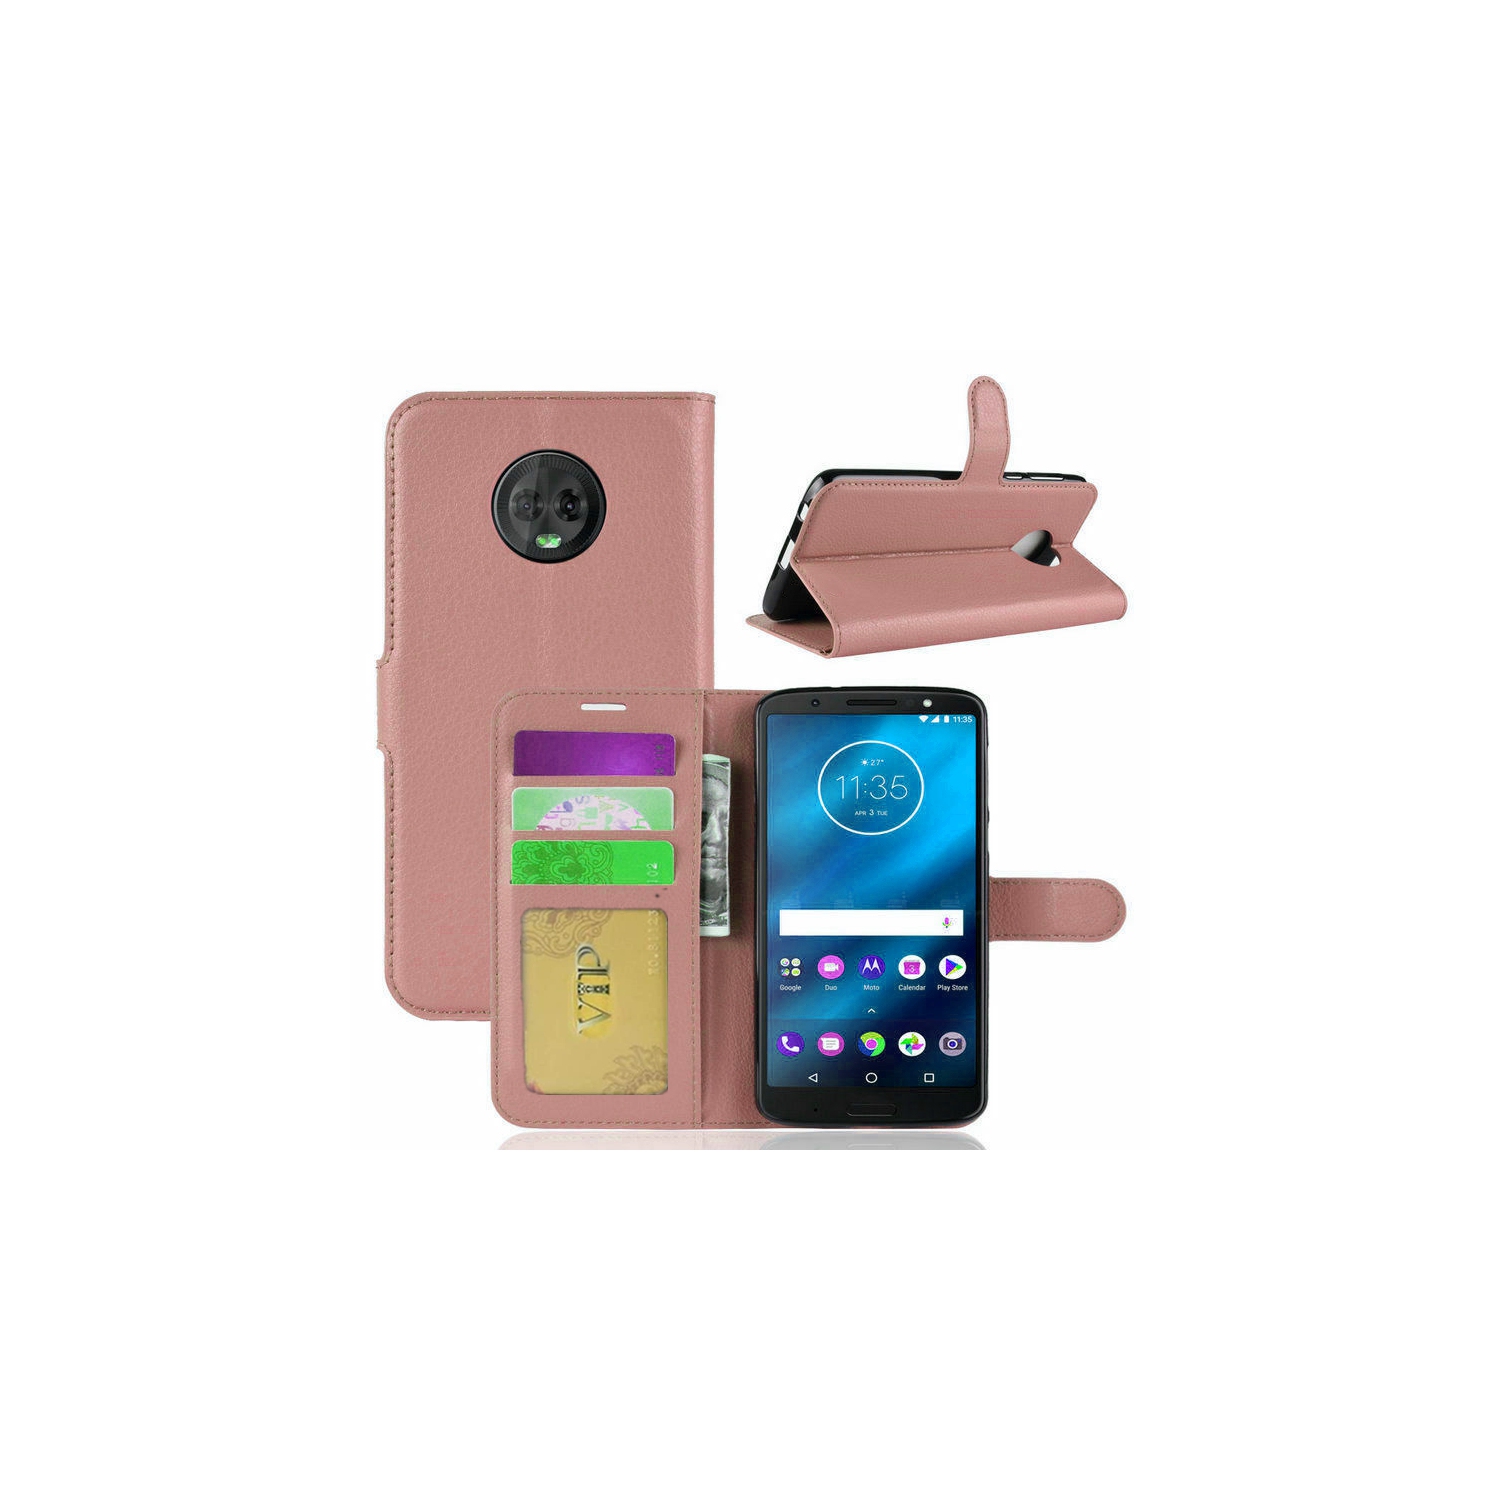 [CS] Motorola Moto G6 Case, Magnetic Leather Folio Wallet Flip Case Cover with Card Slot, Rose Gold